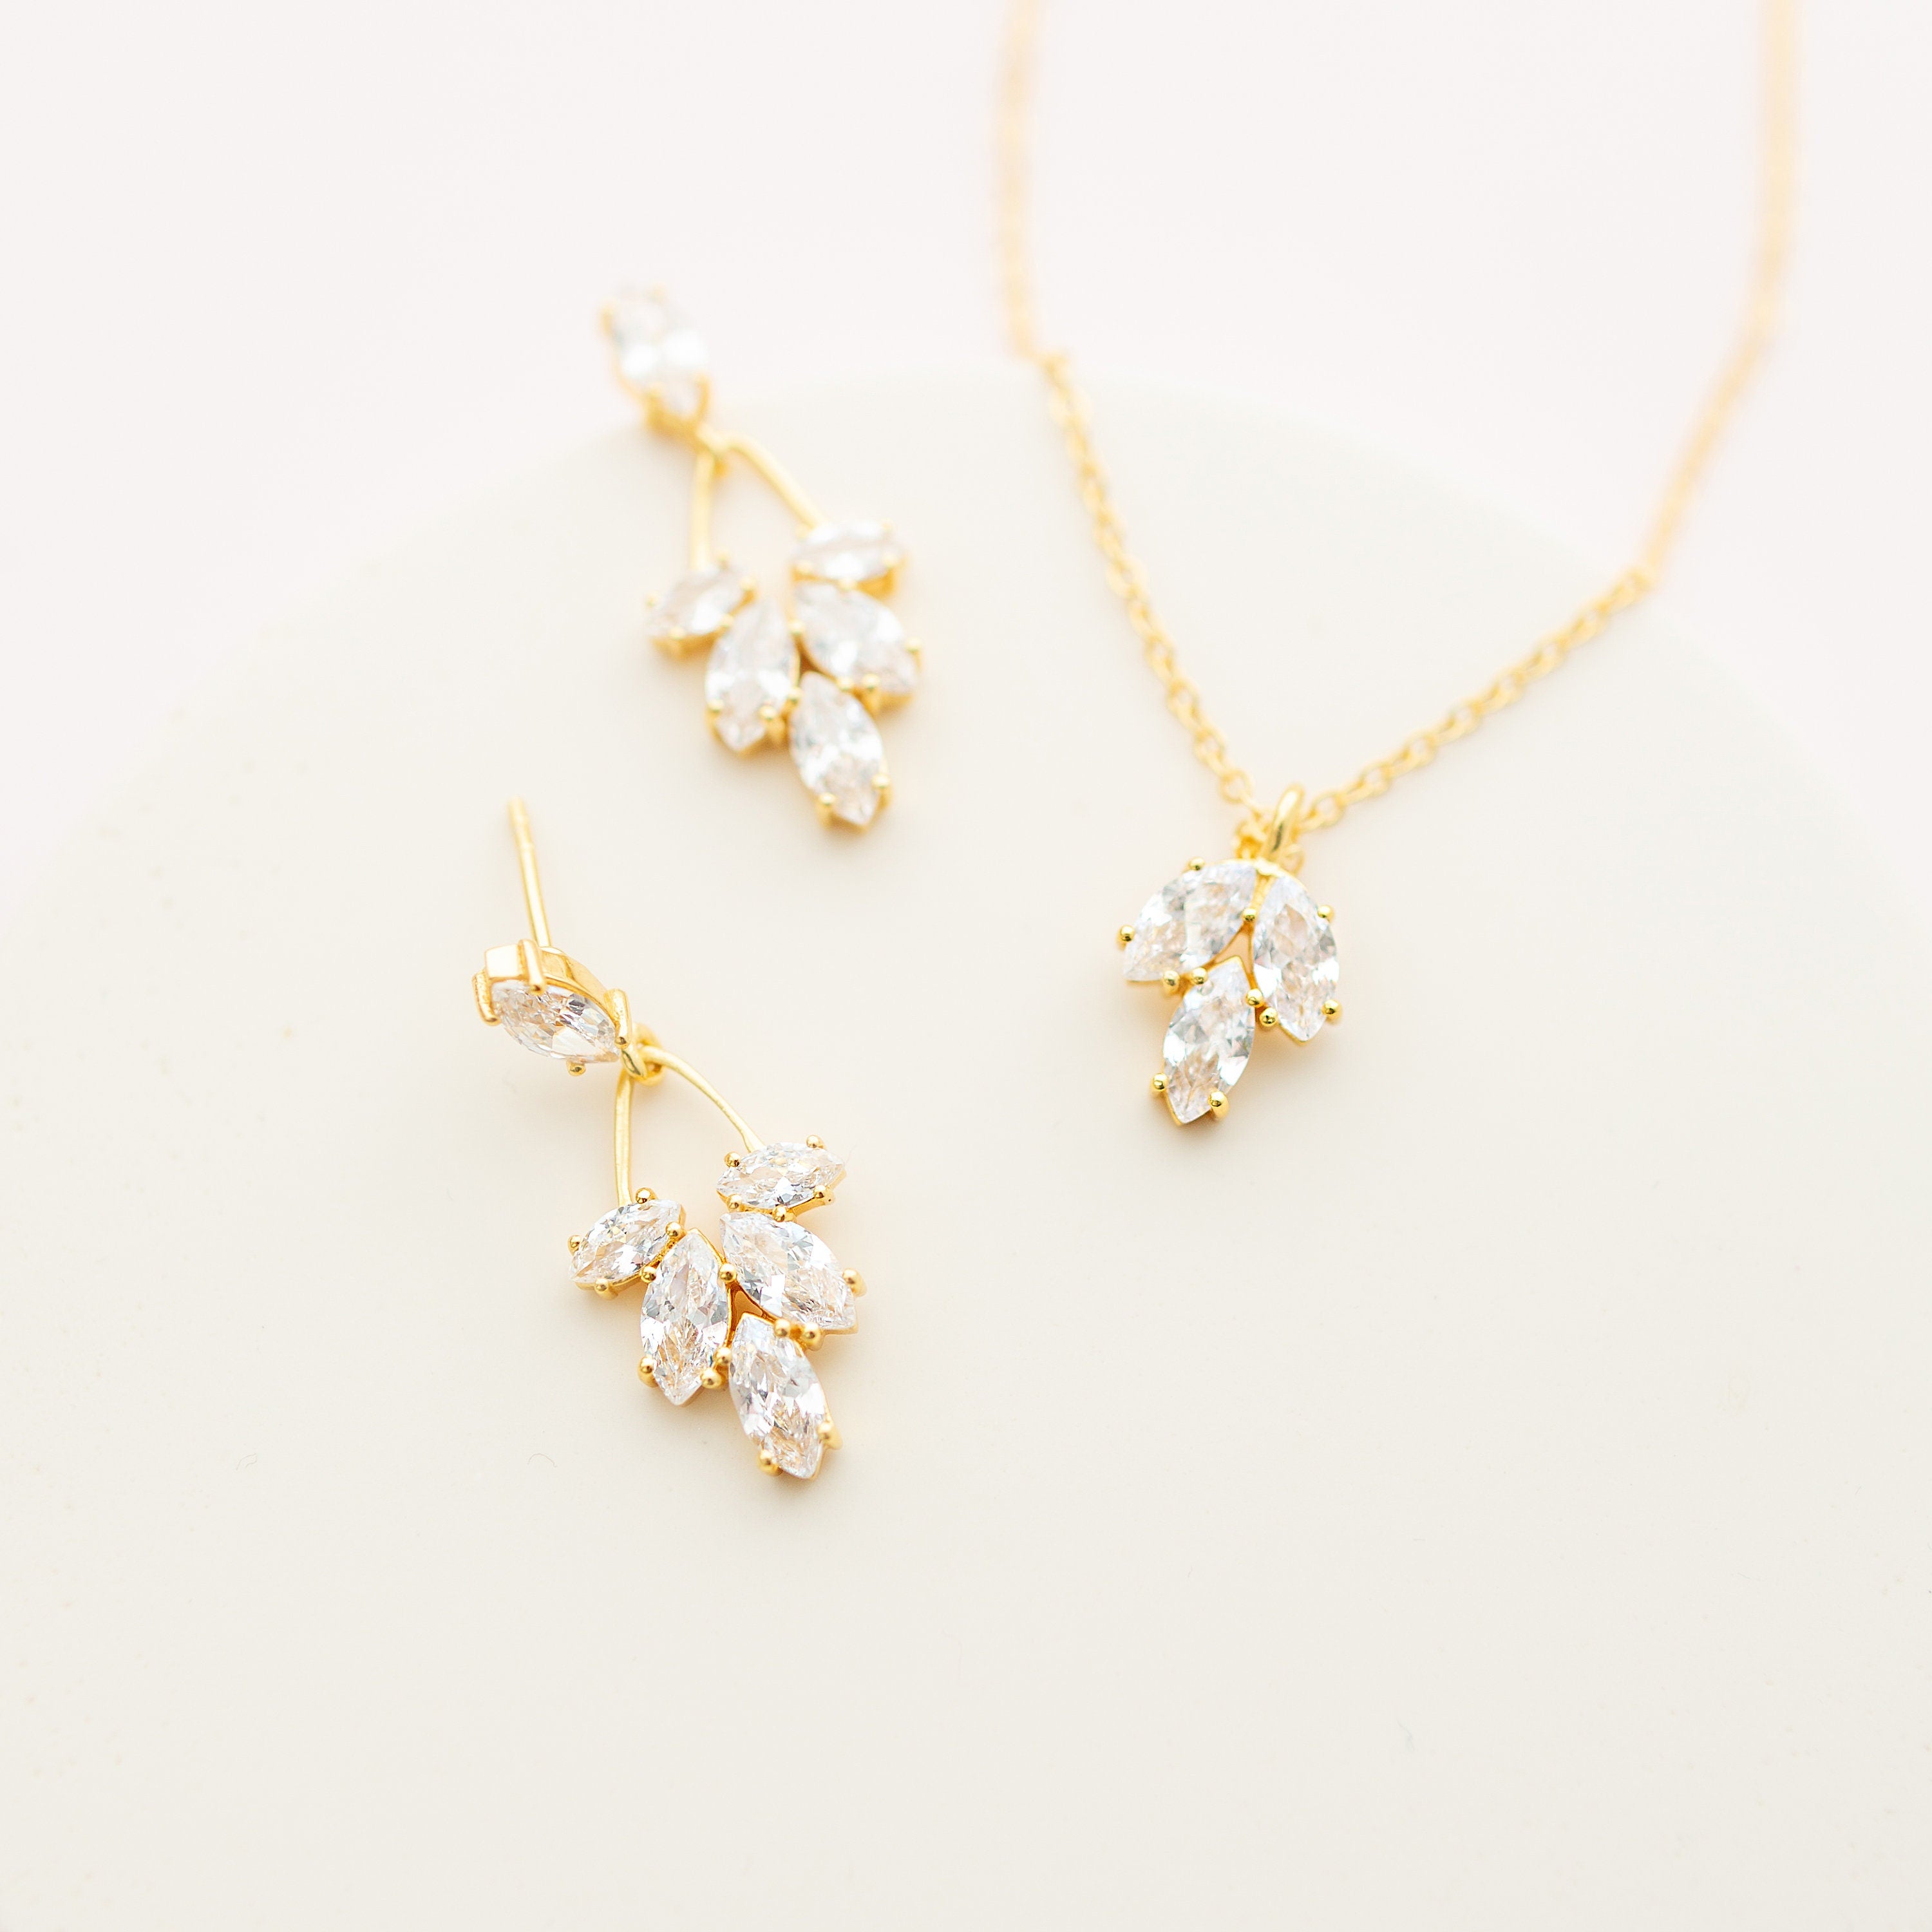 ANNA NECKLACE // Crystal leaf wedding necklace